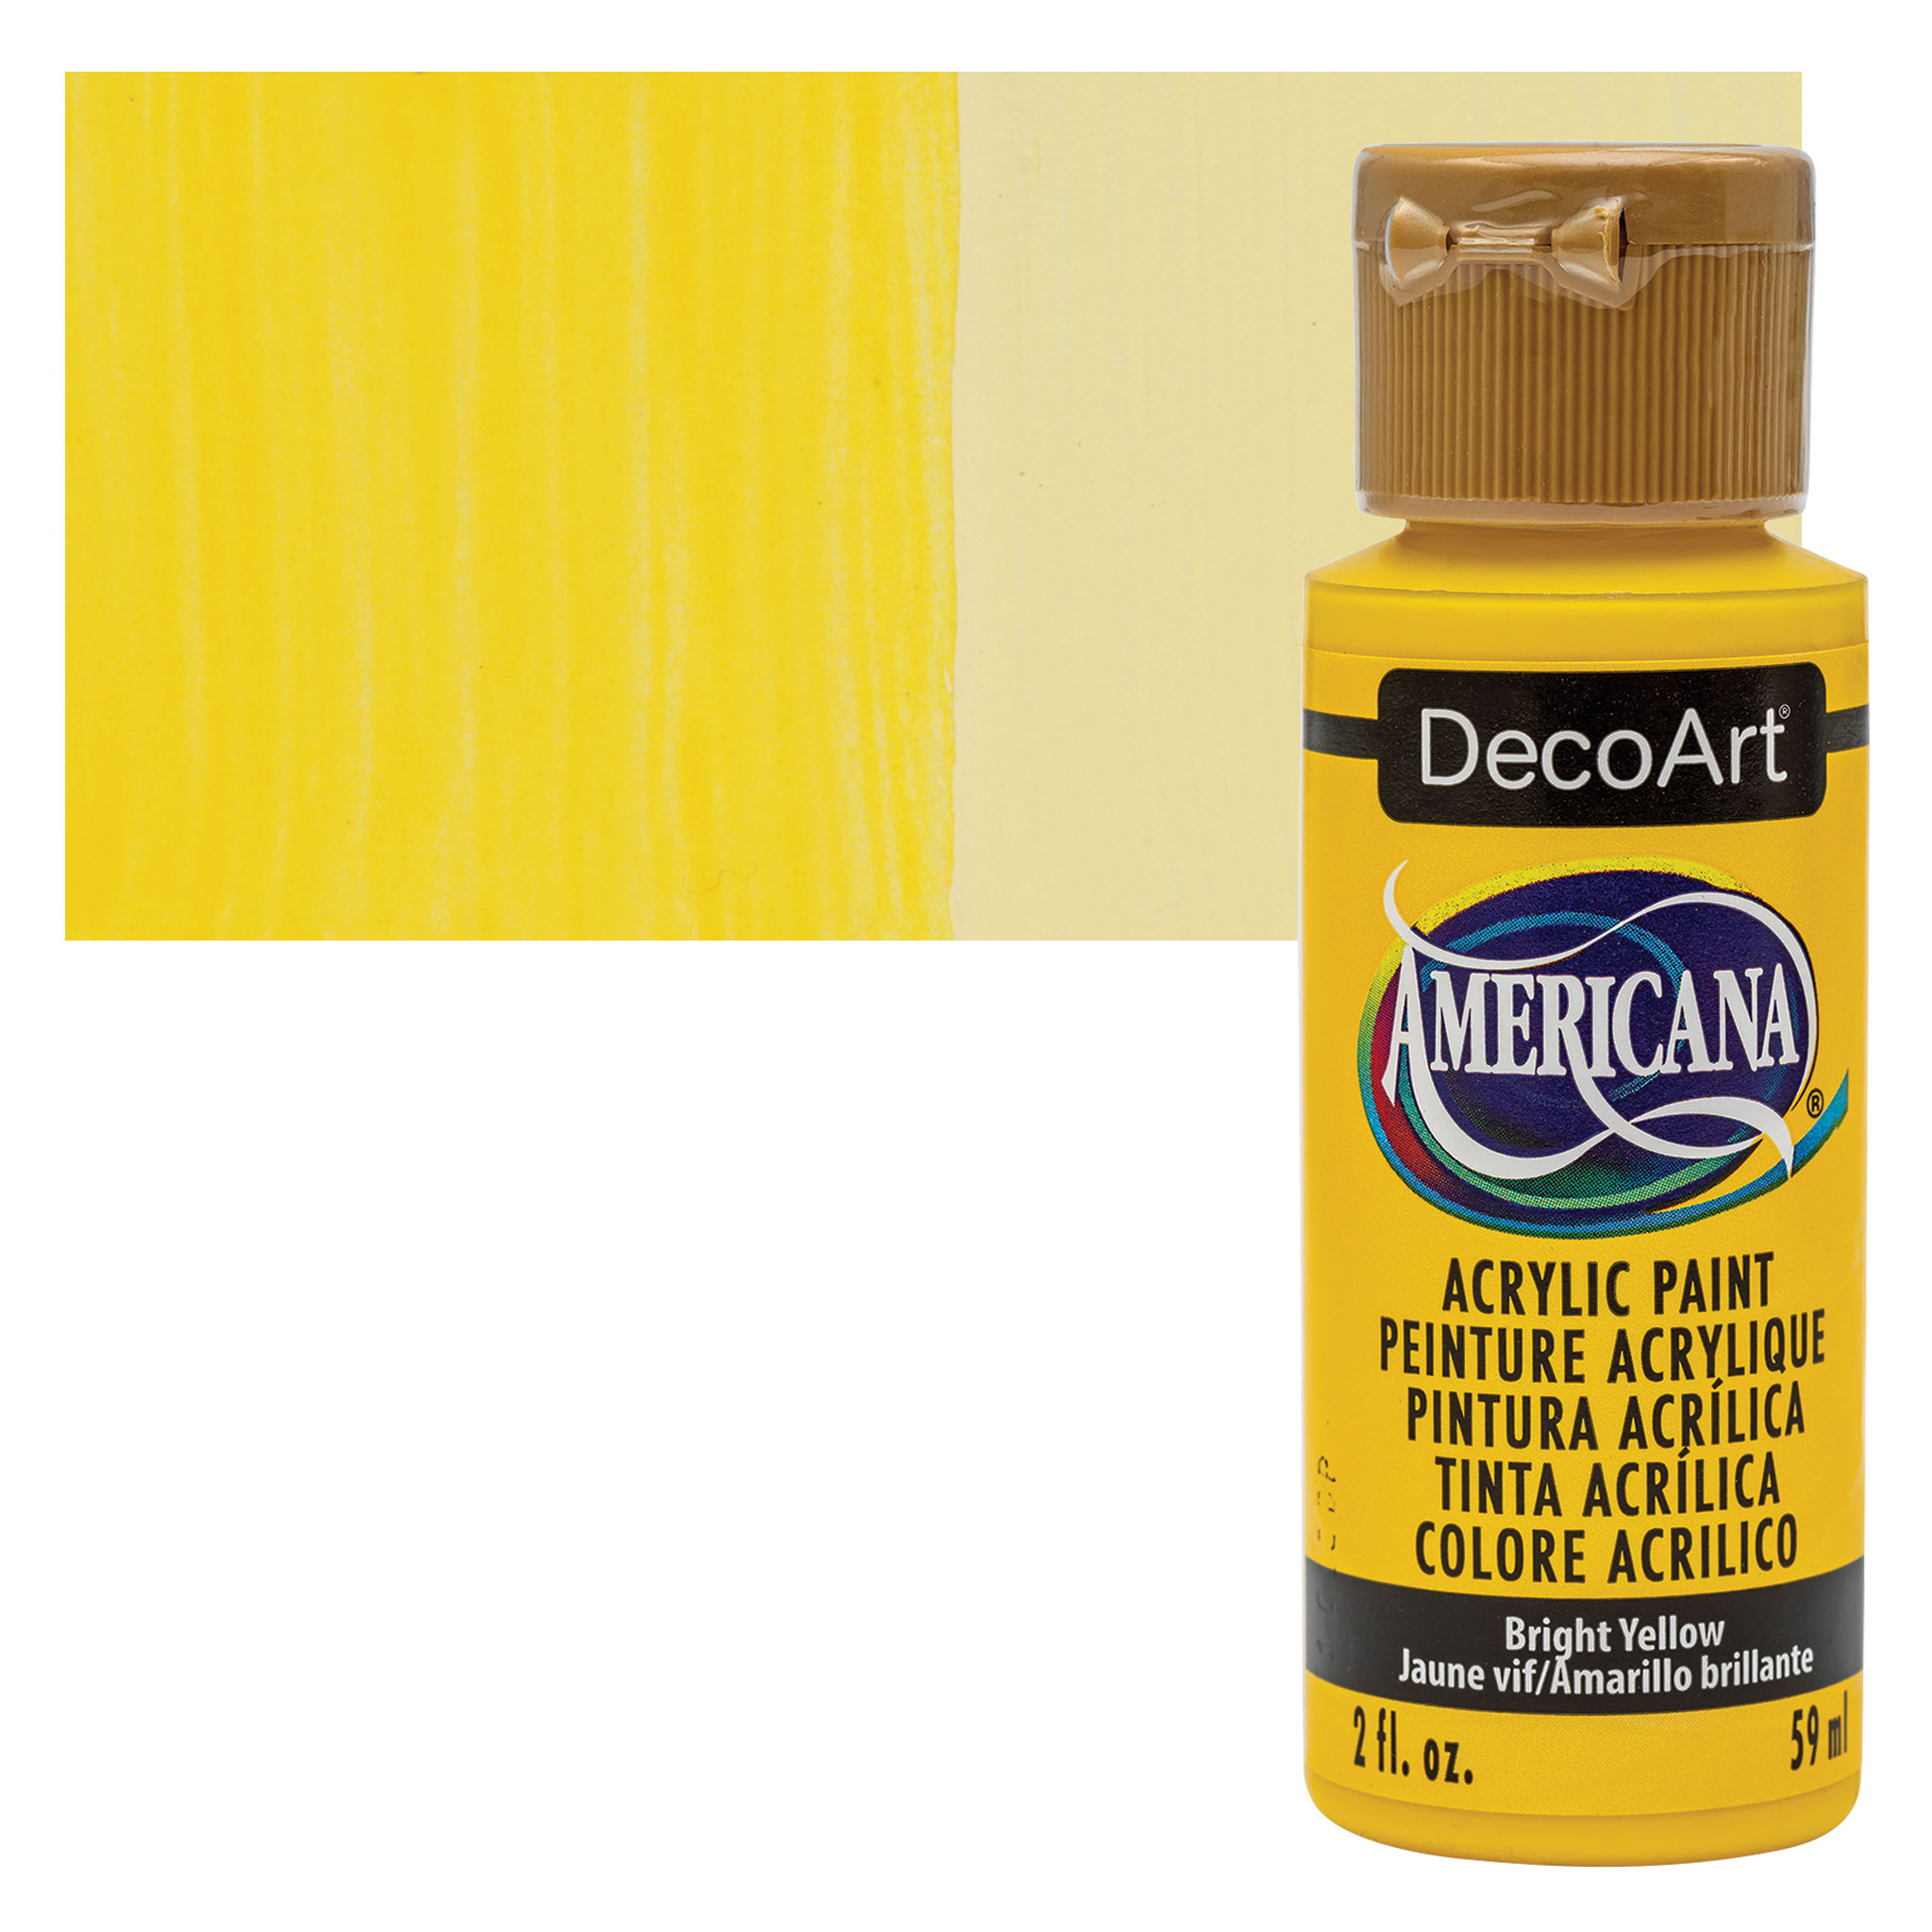 DecoArt Americana Acrylic Paint - Bright Yellow, 2 oz